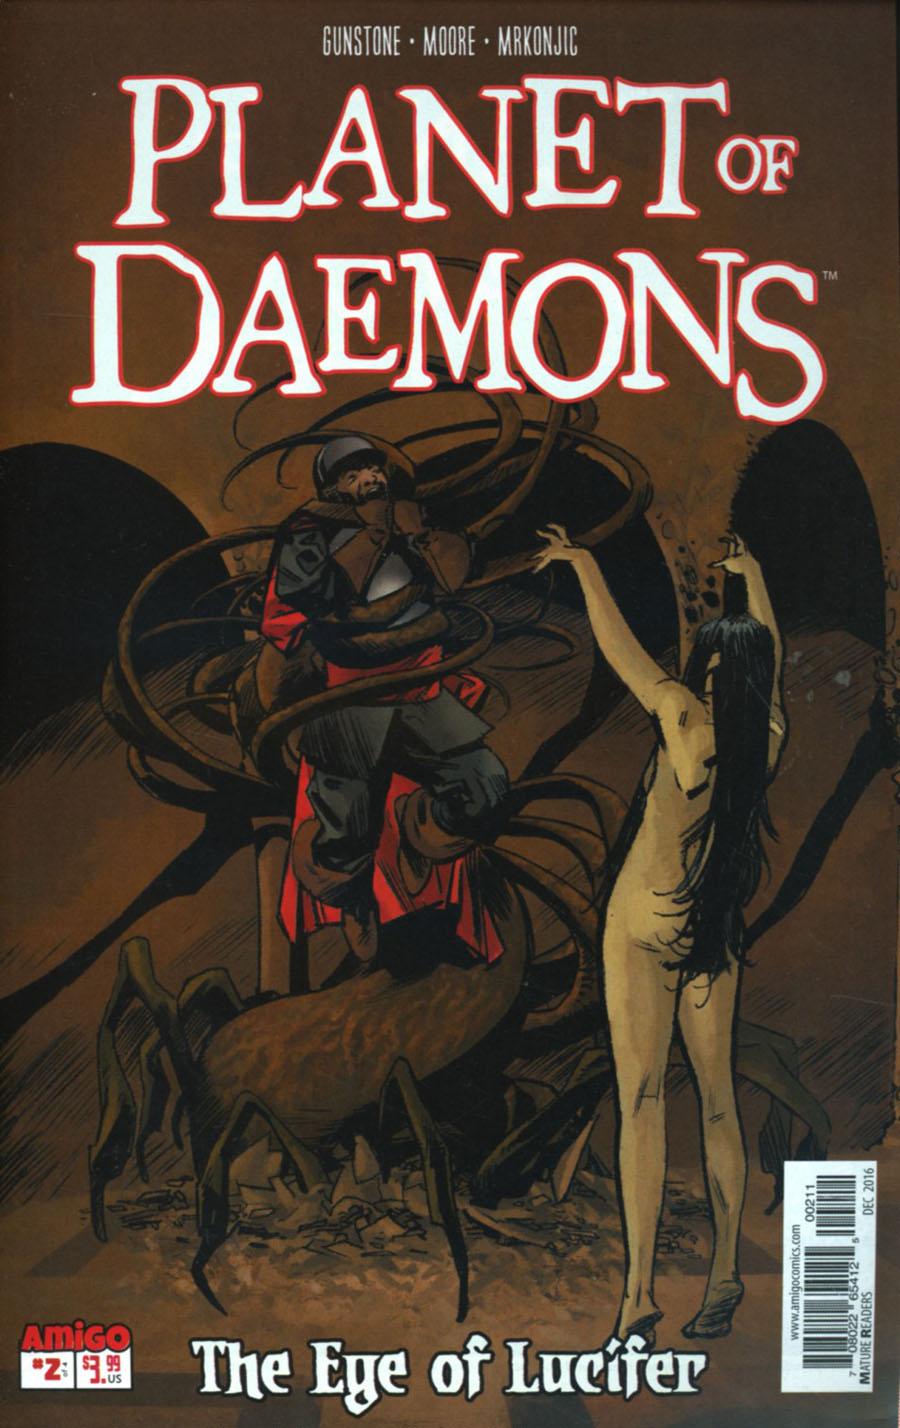 Planet Of Daemons Vol. 1 #2